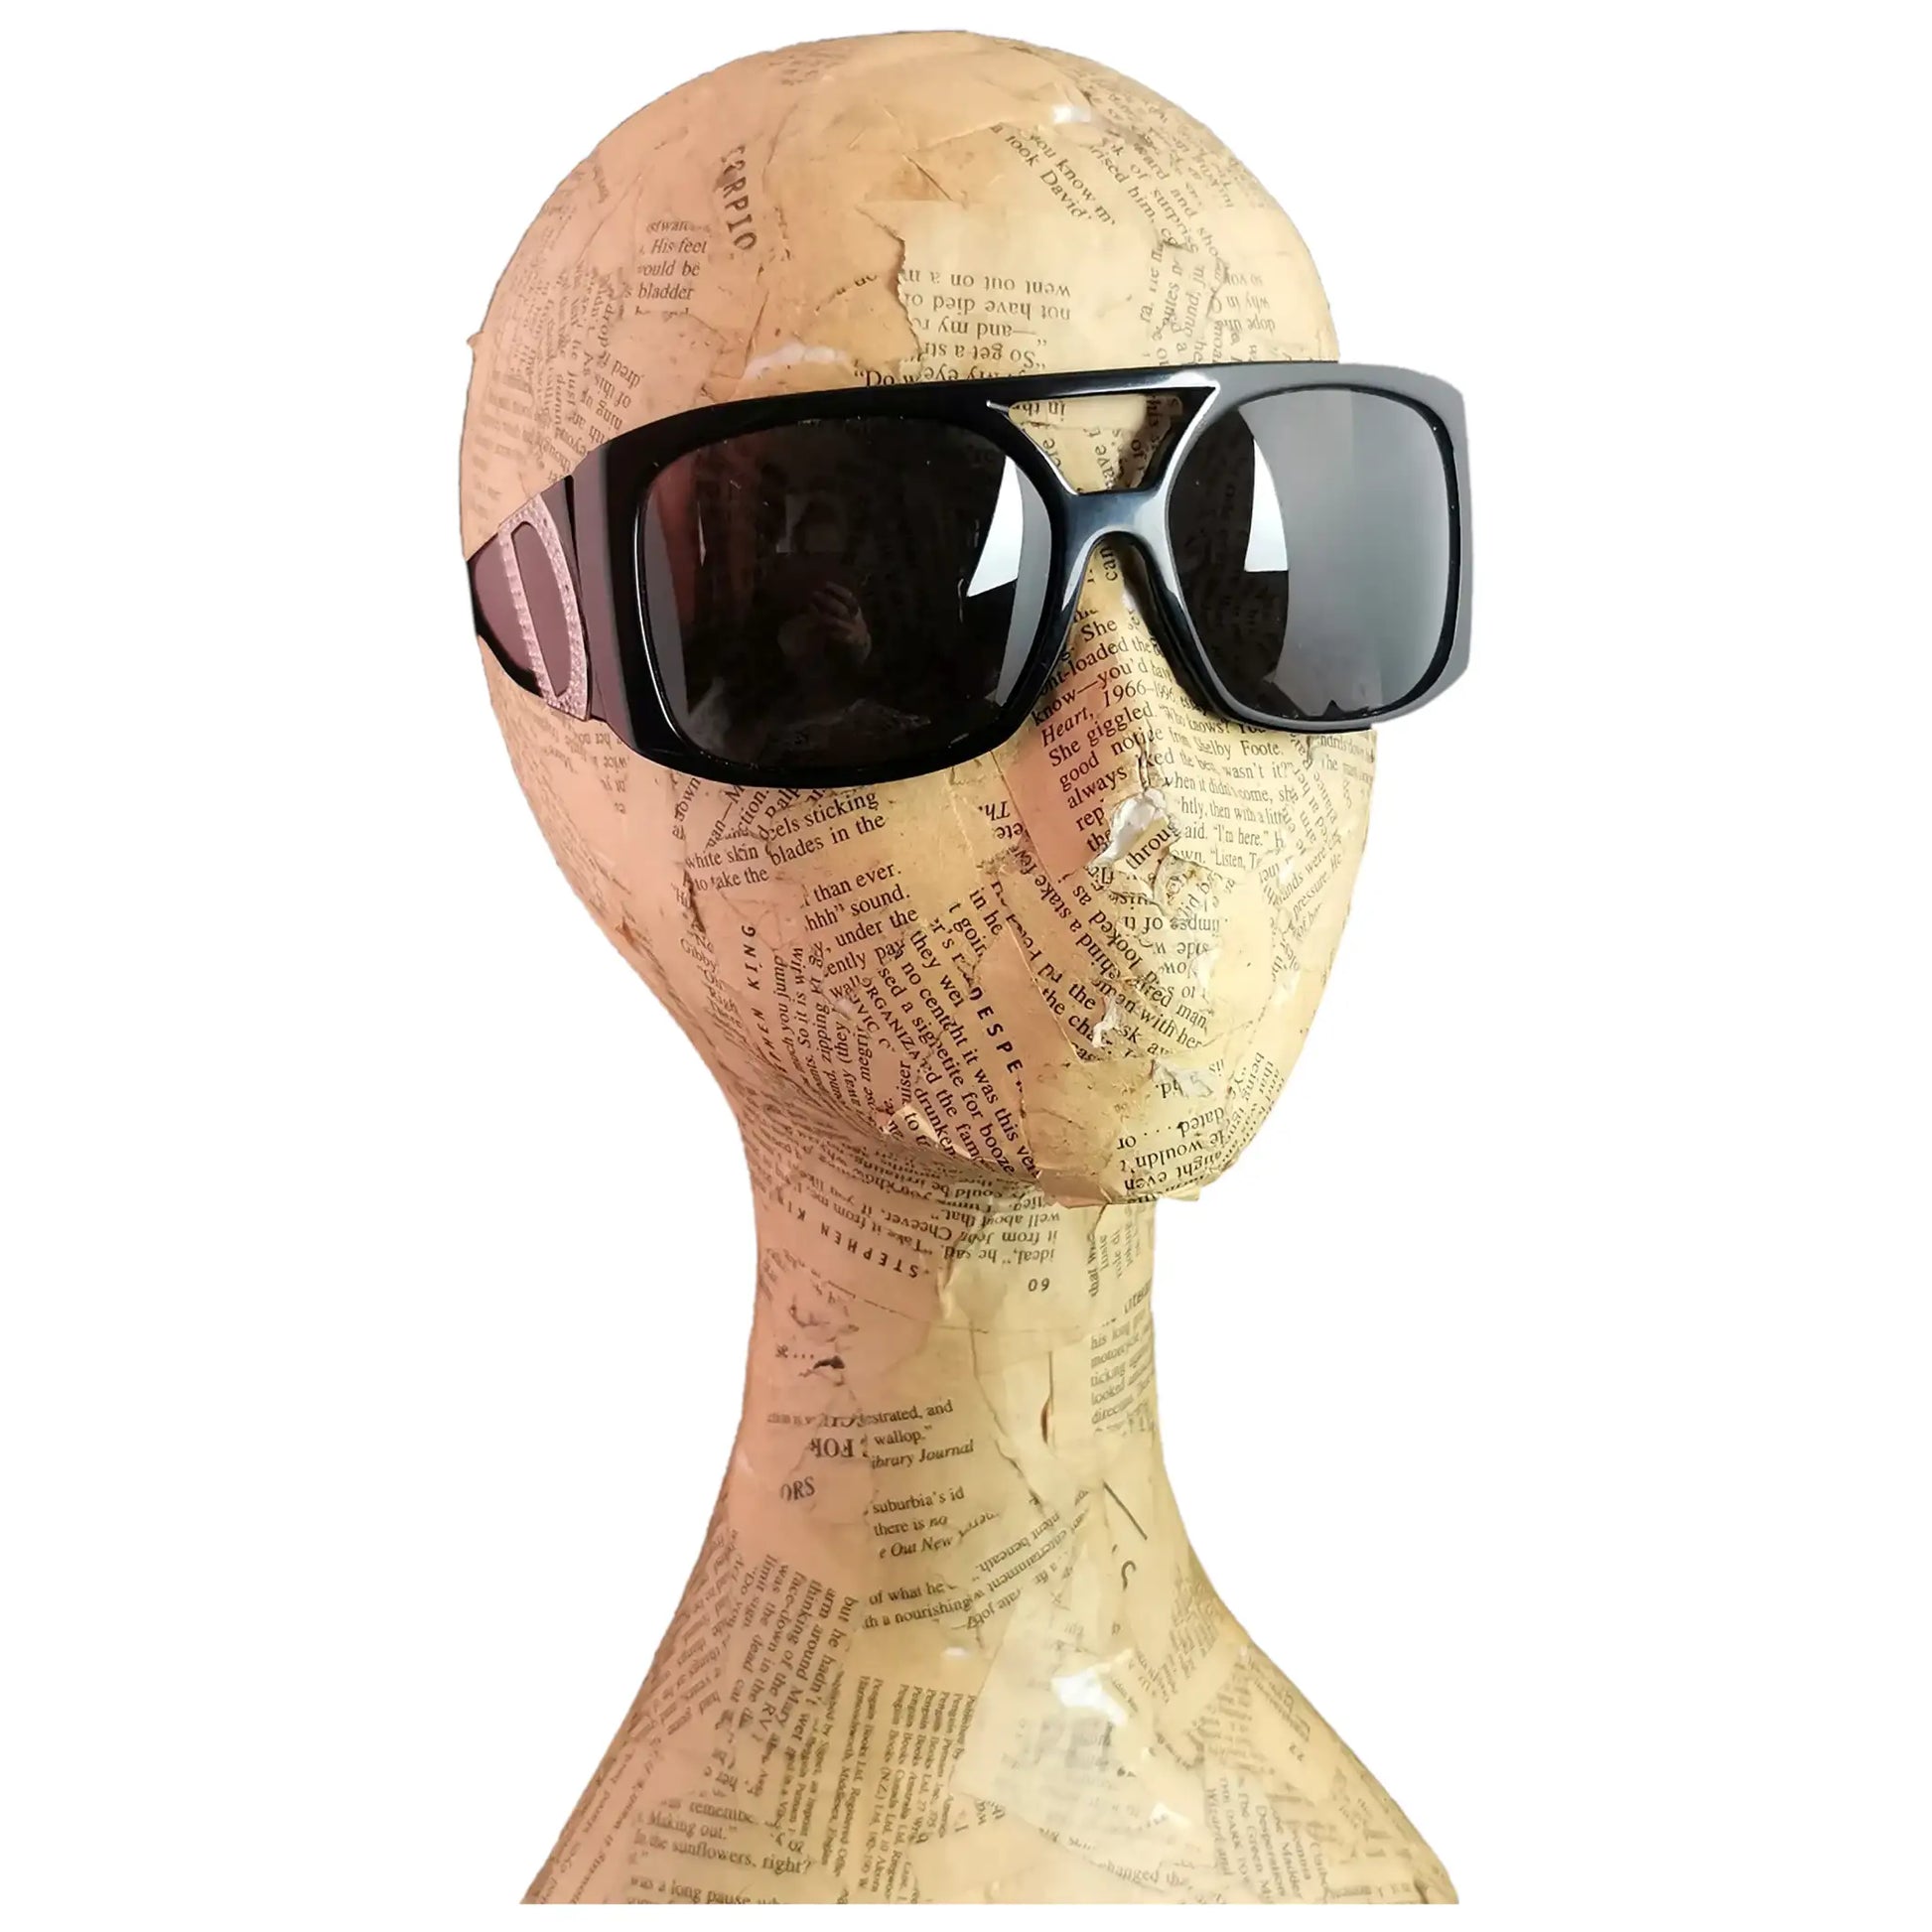 Dolce and Gabbana faux tortoiseshell sunglasses, Silver tone logo